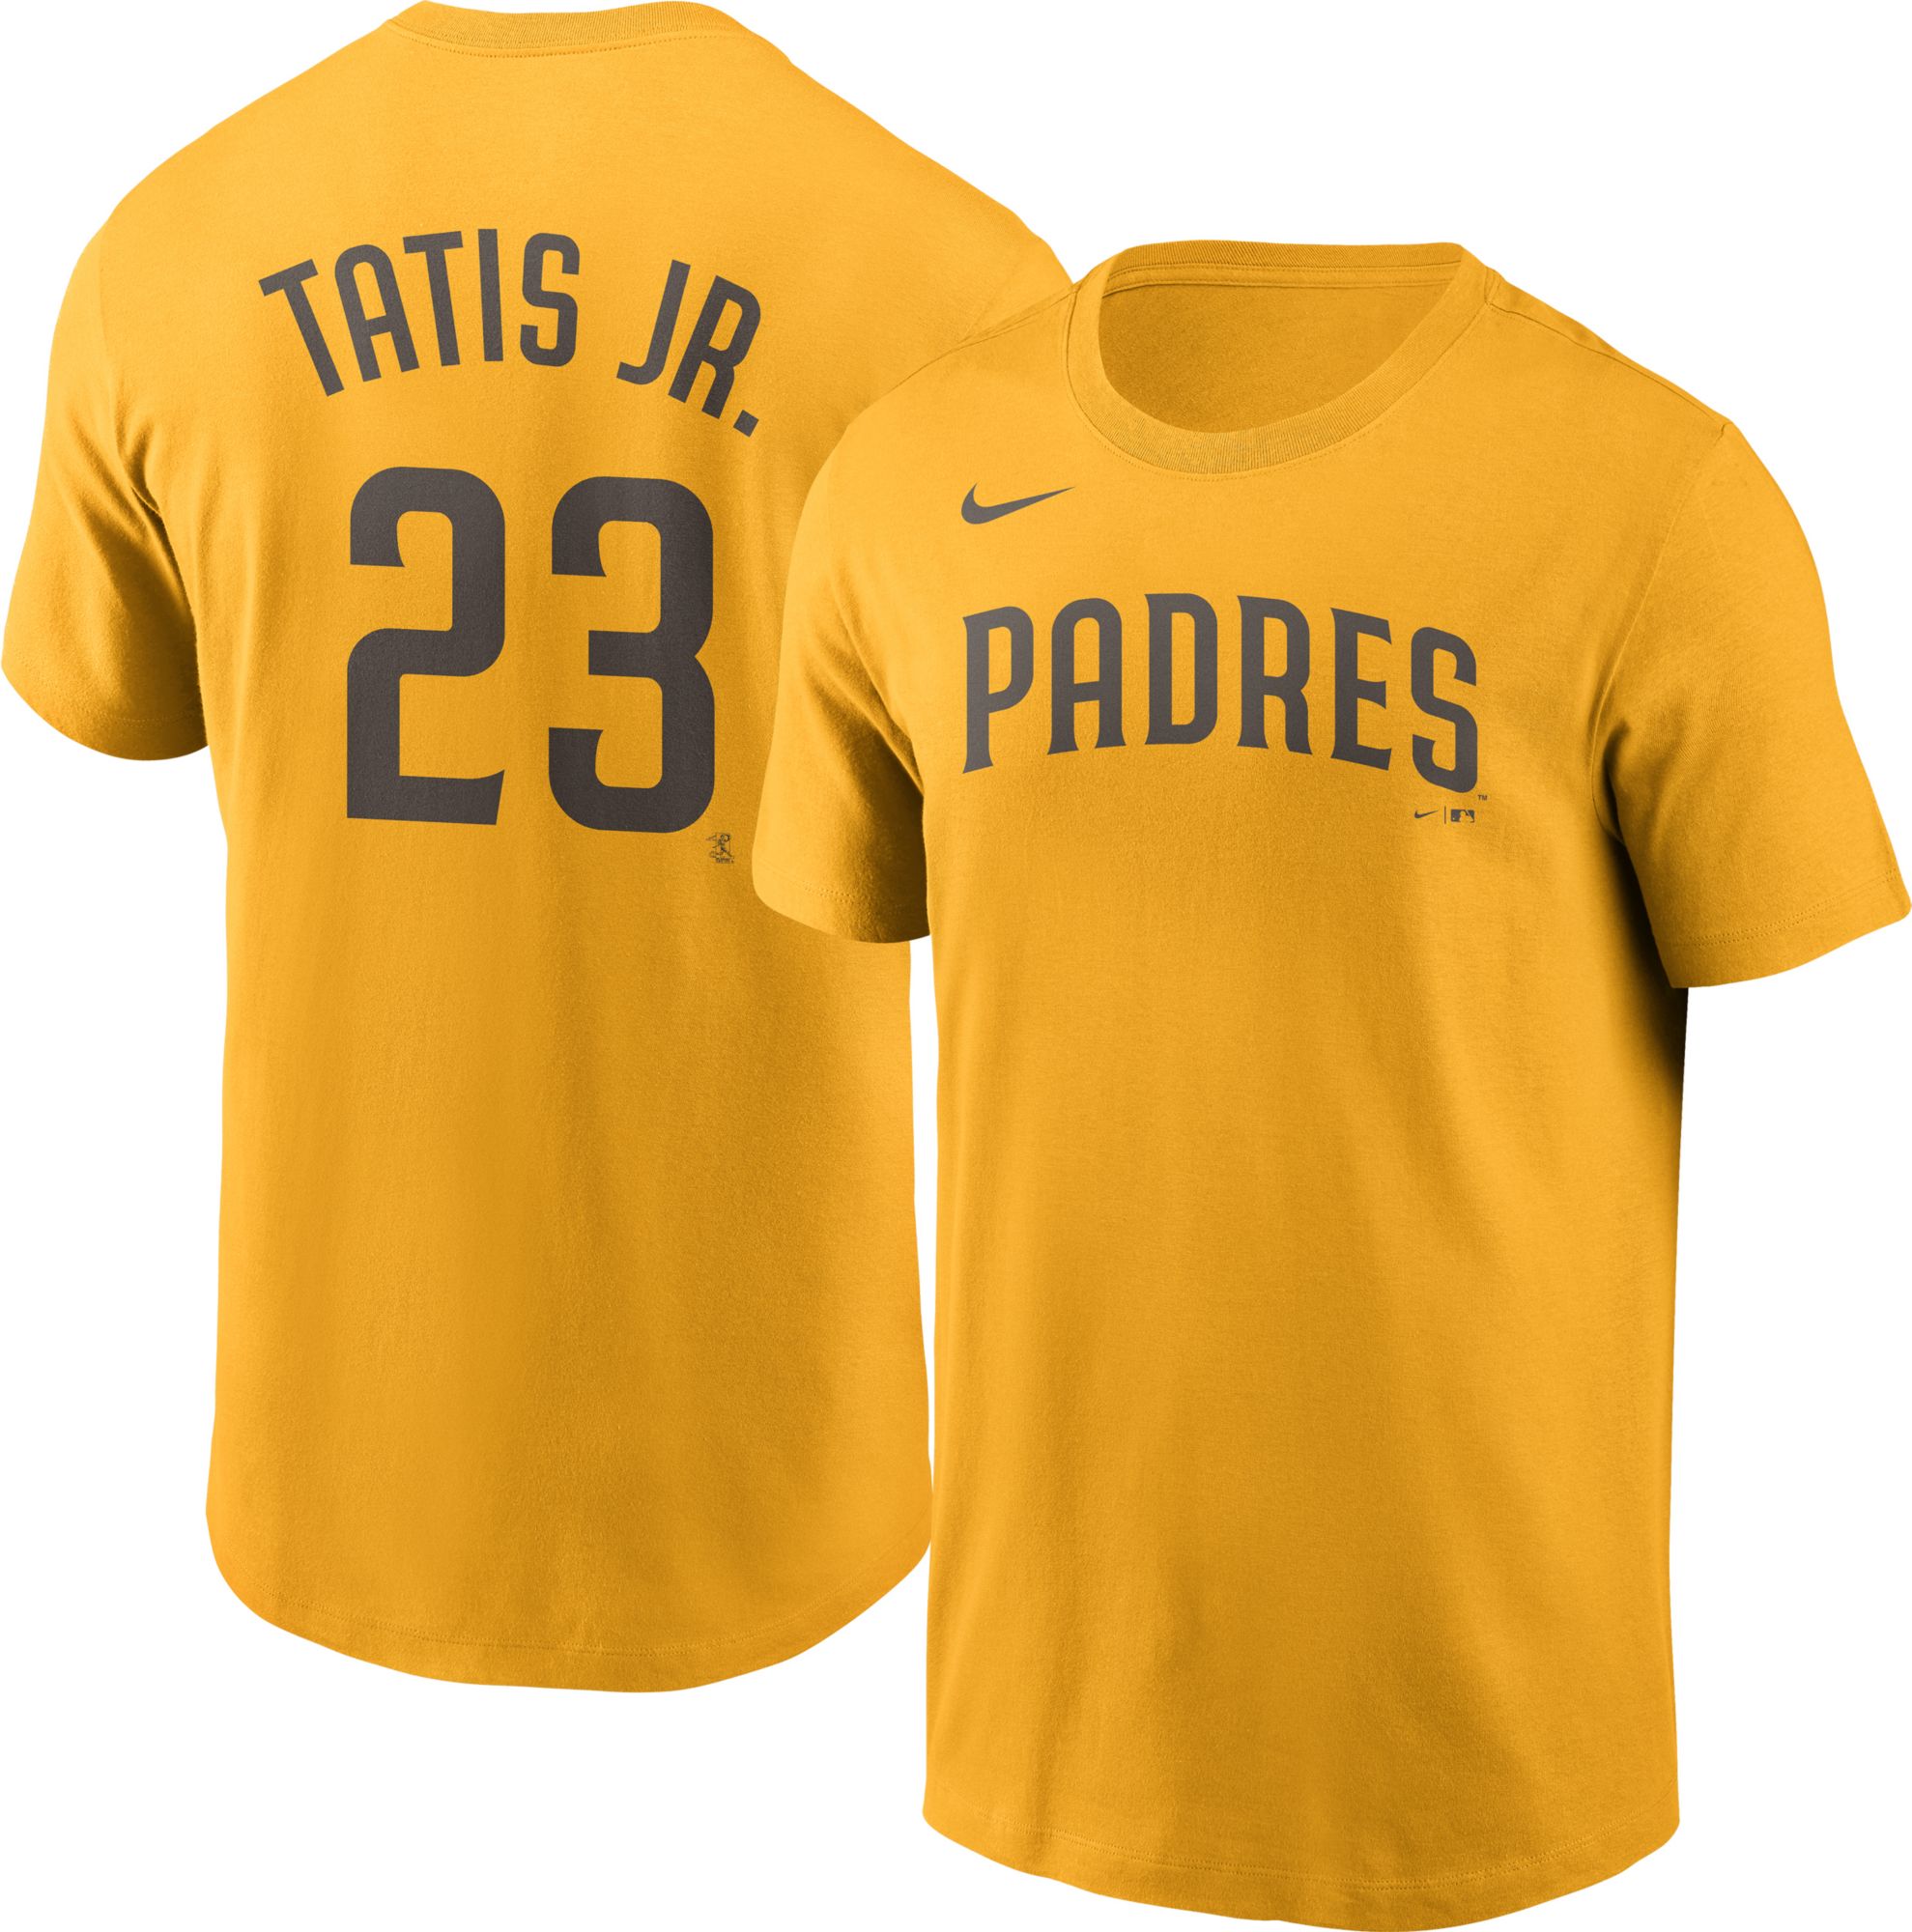 Nike Men's Replica San Diego Padres Fernando Tatis Jr. #23 Cool